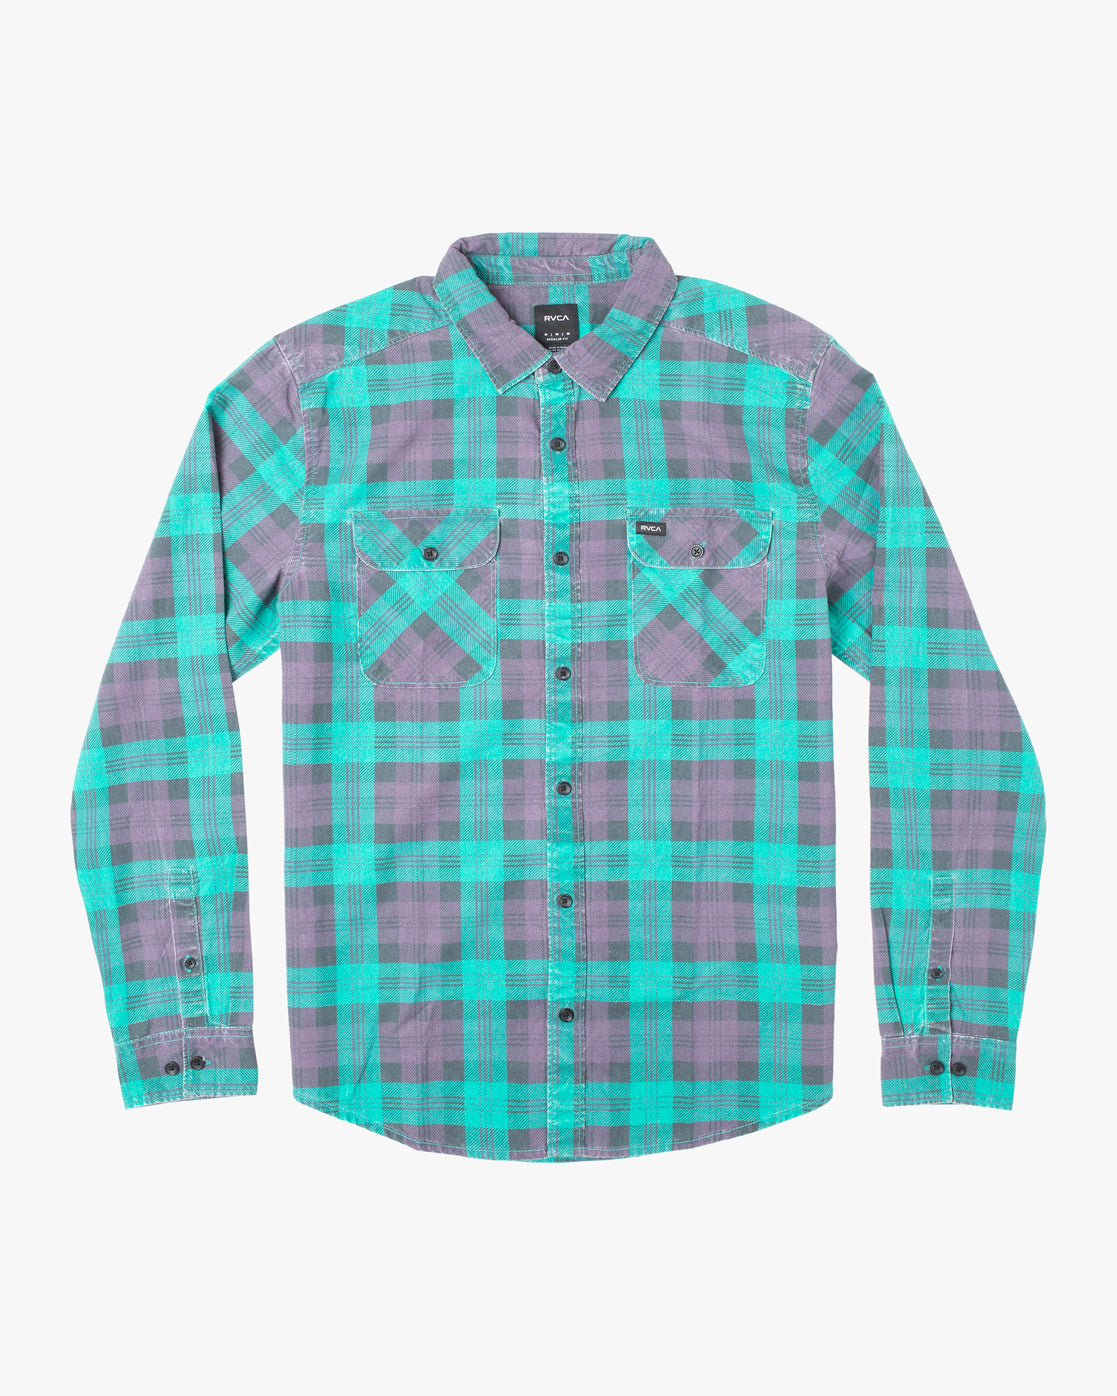 RVCA Panhandle Flannel Shirt